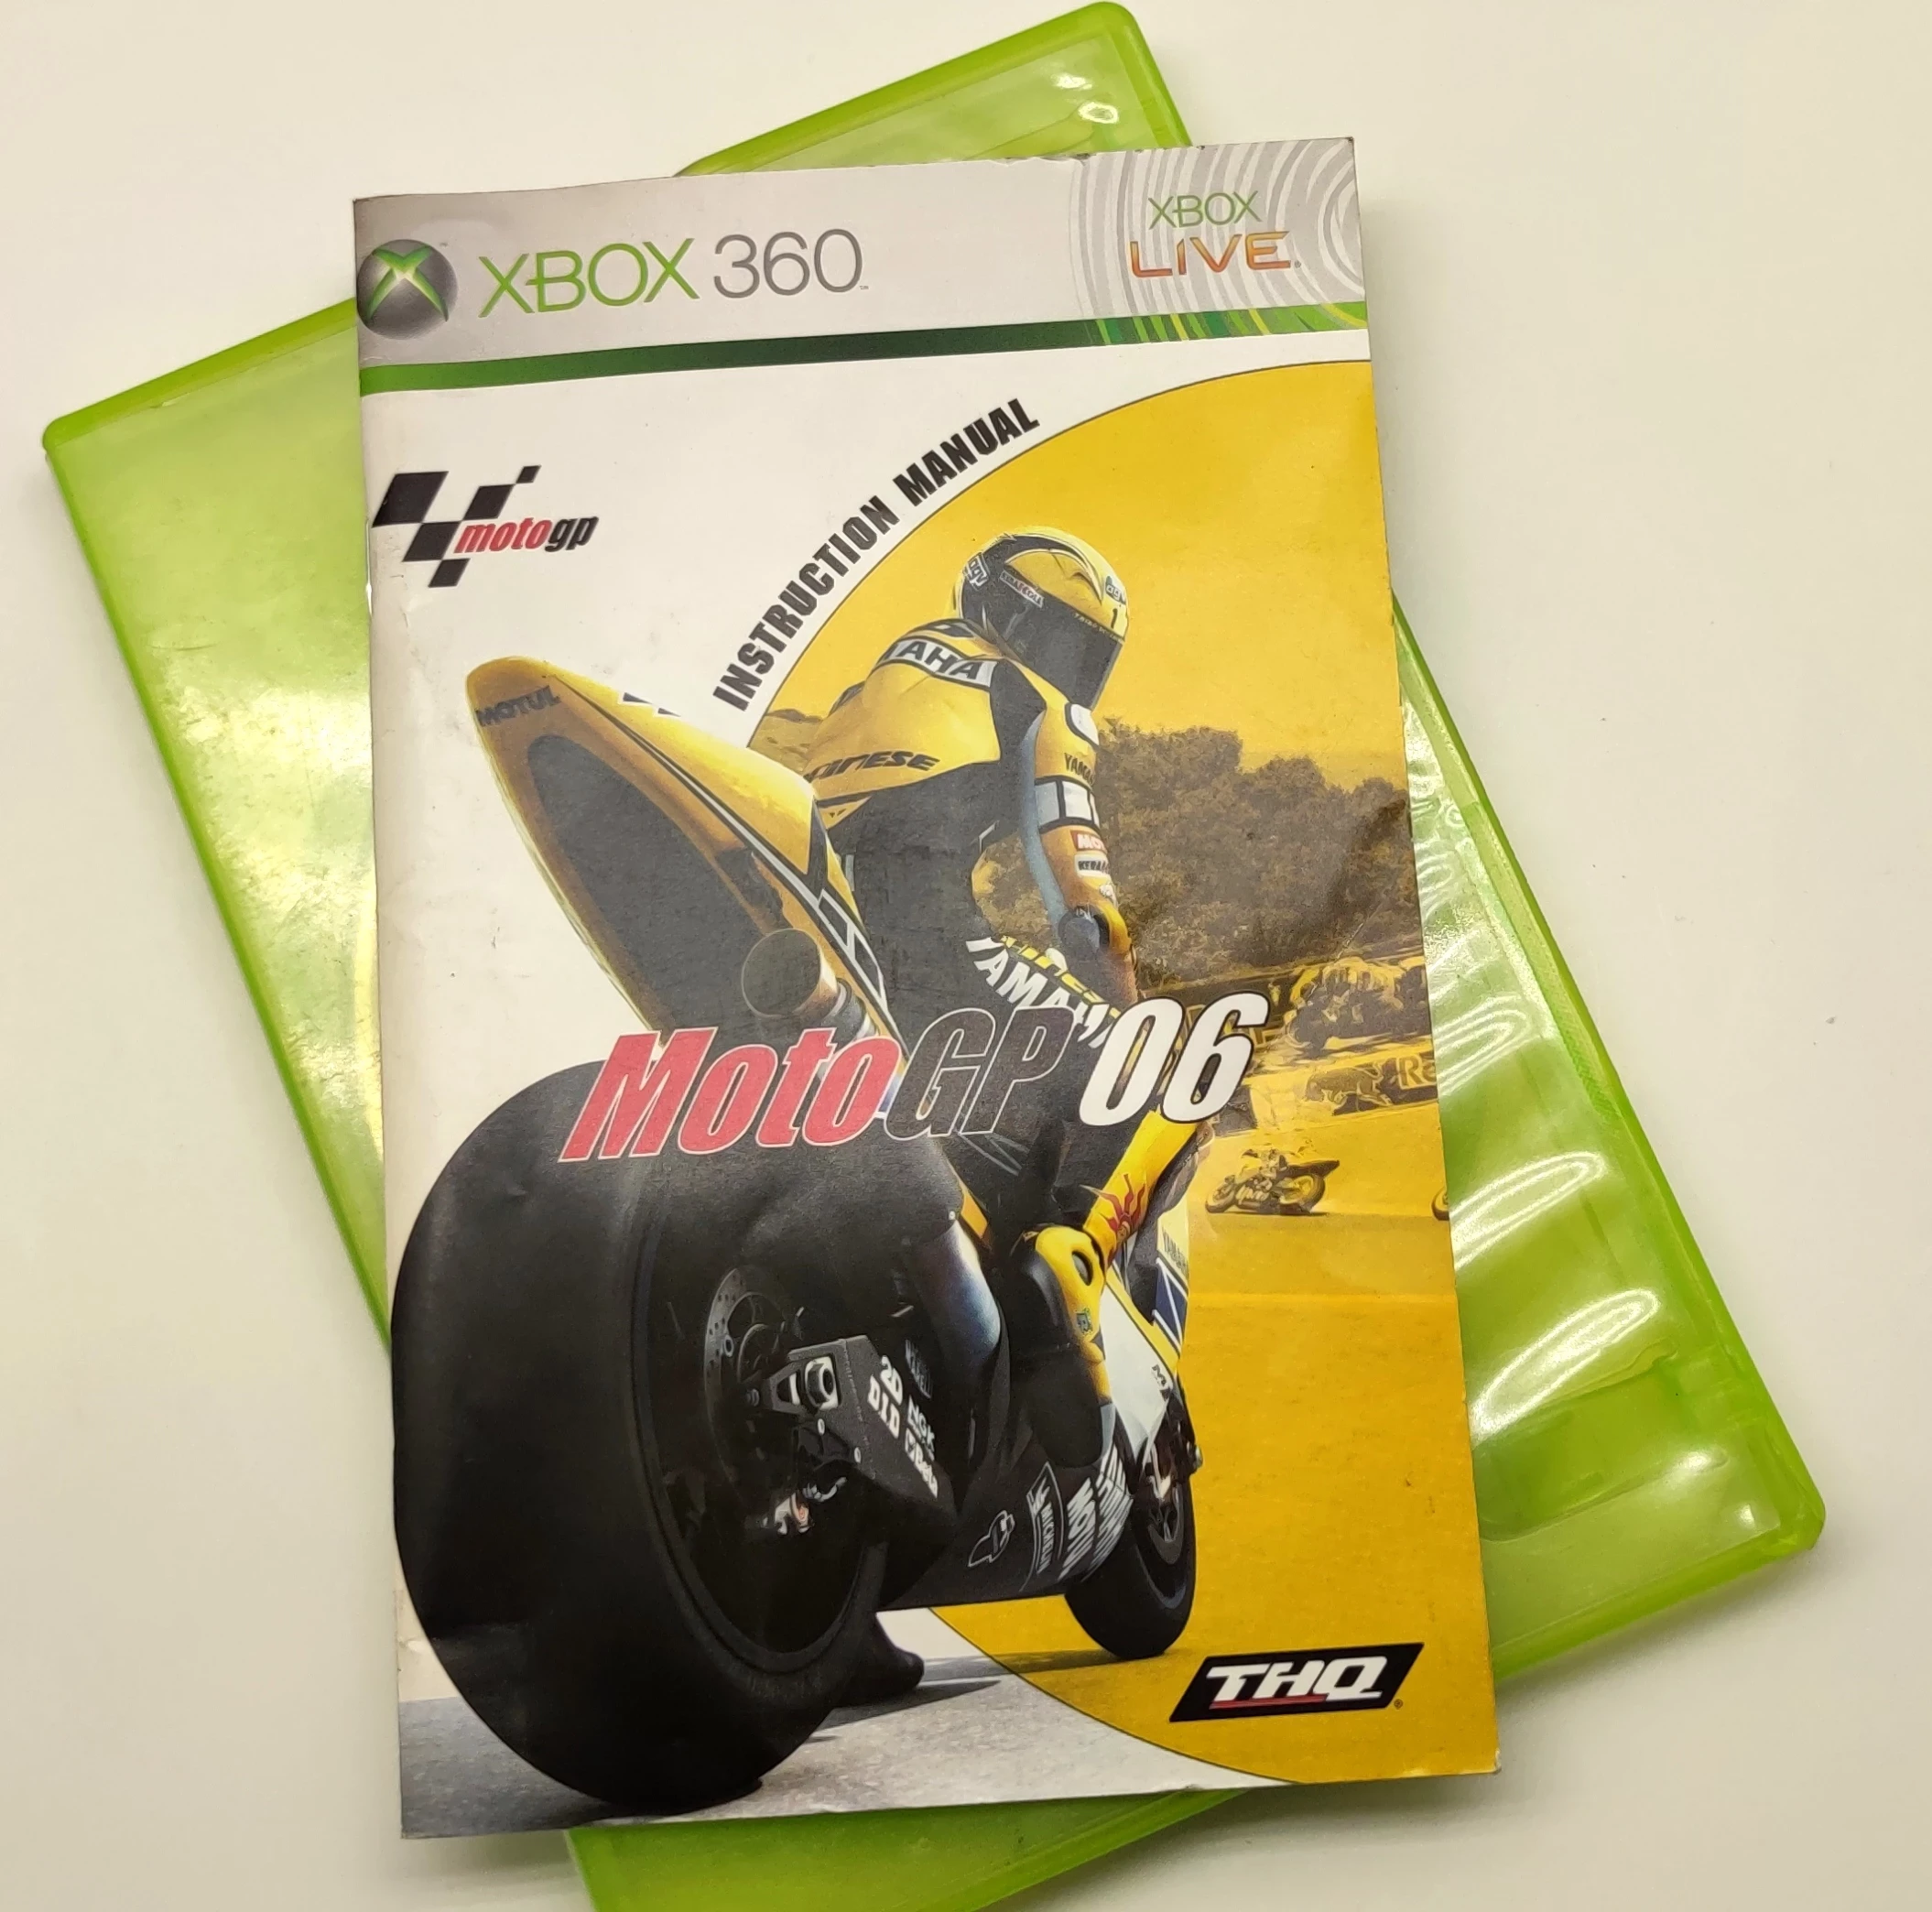 Moto GP 06 - Xbox 360